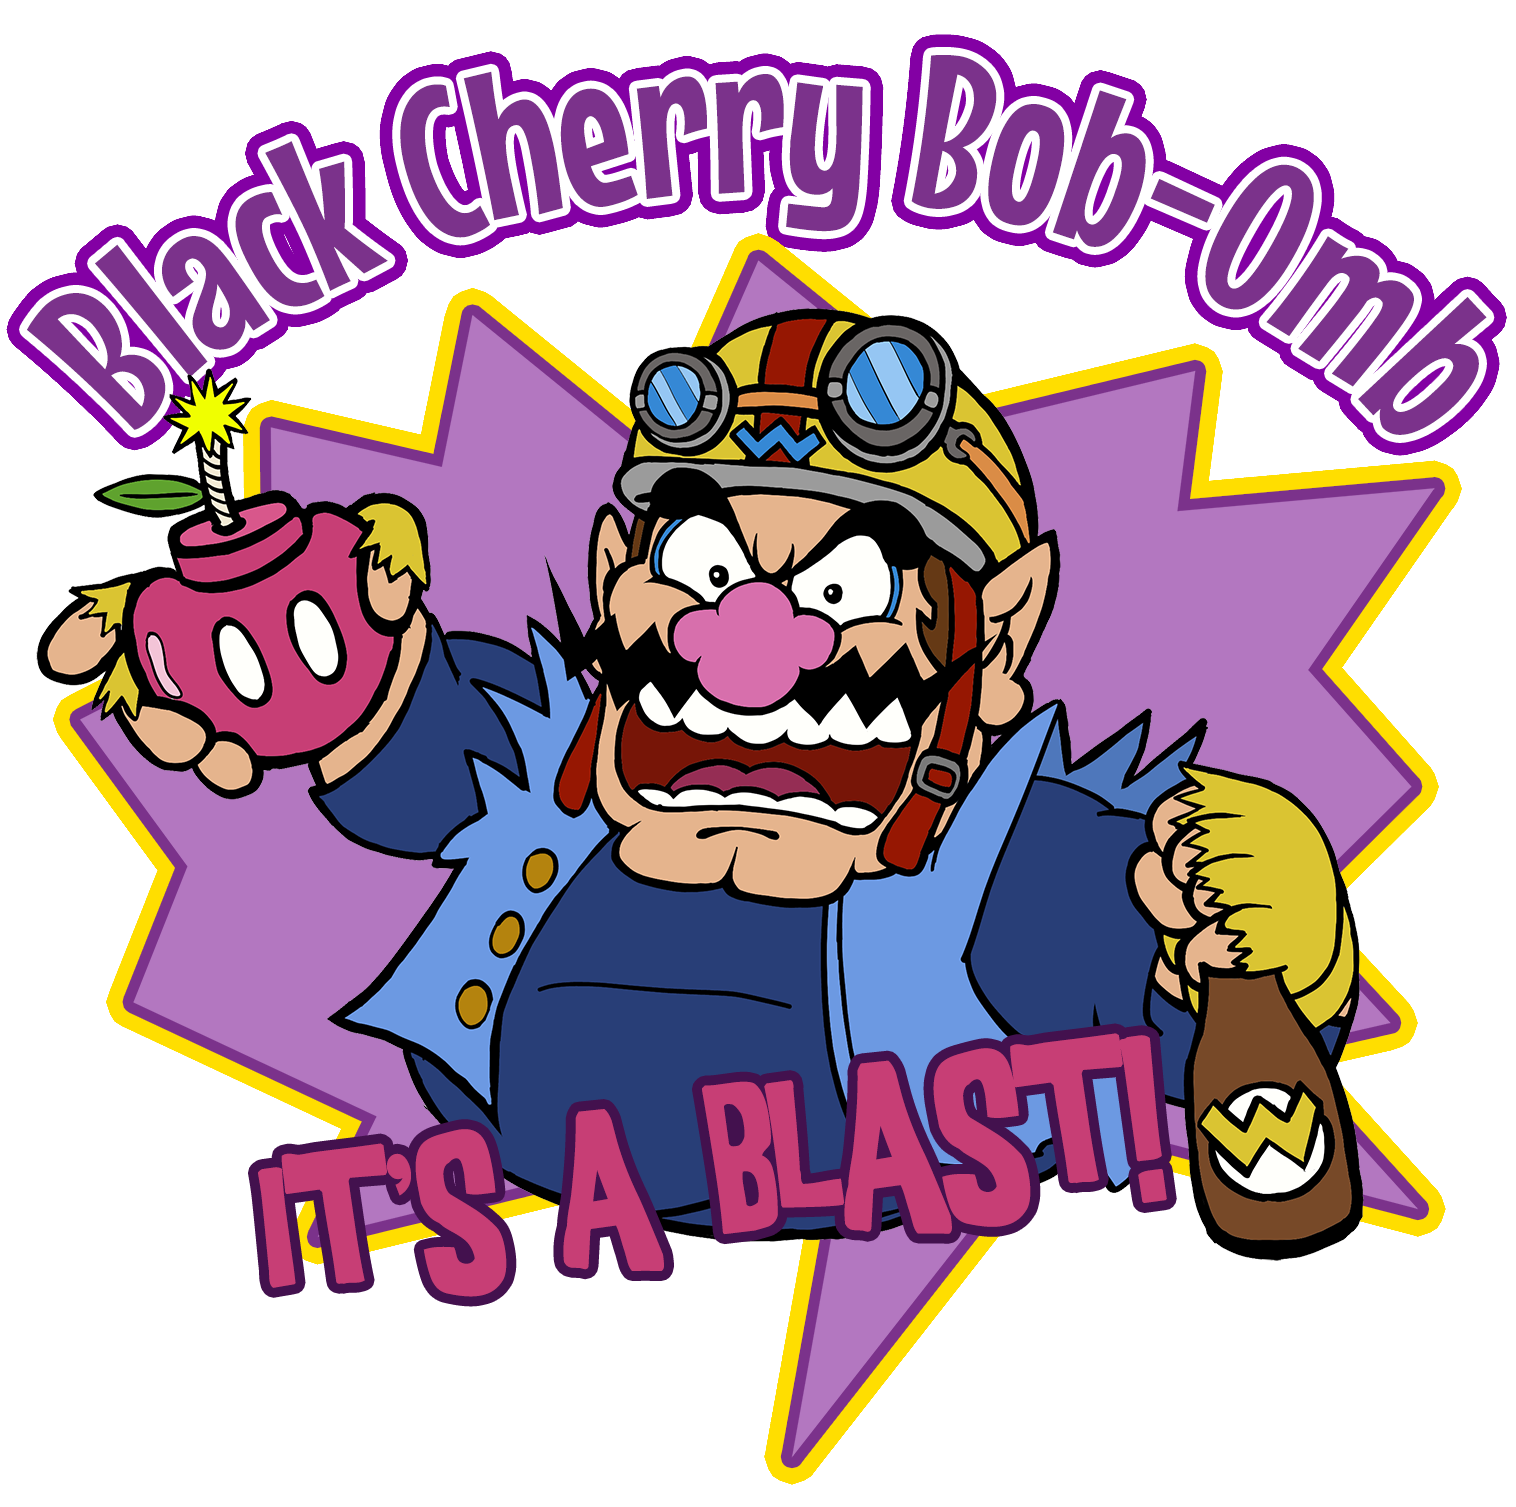 Black Cherry Bob-Omb featuring Wario